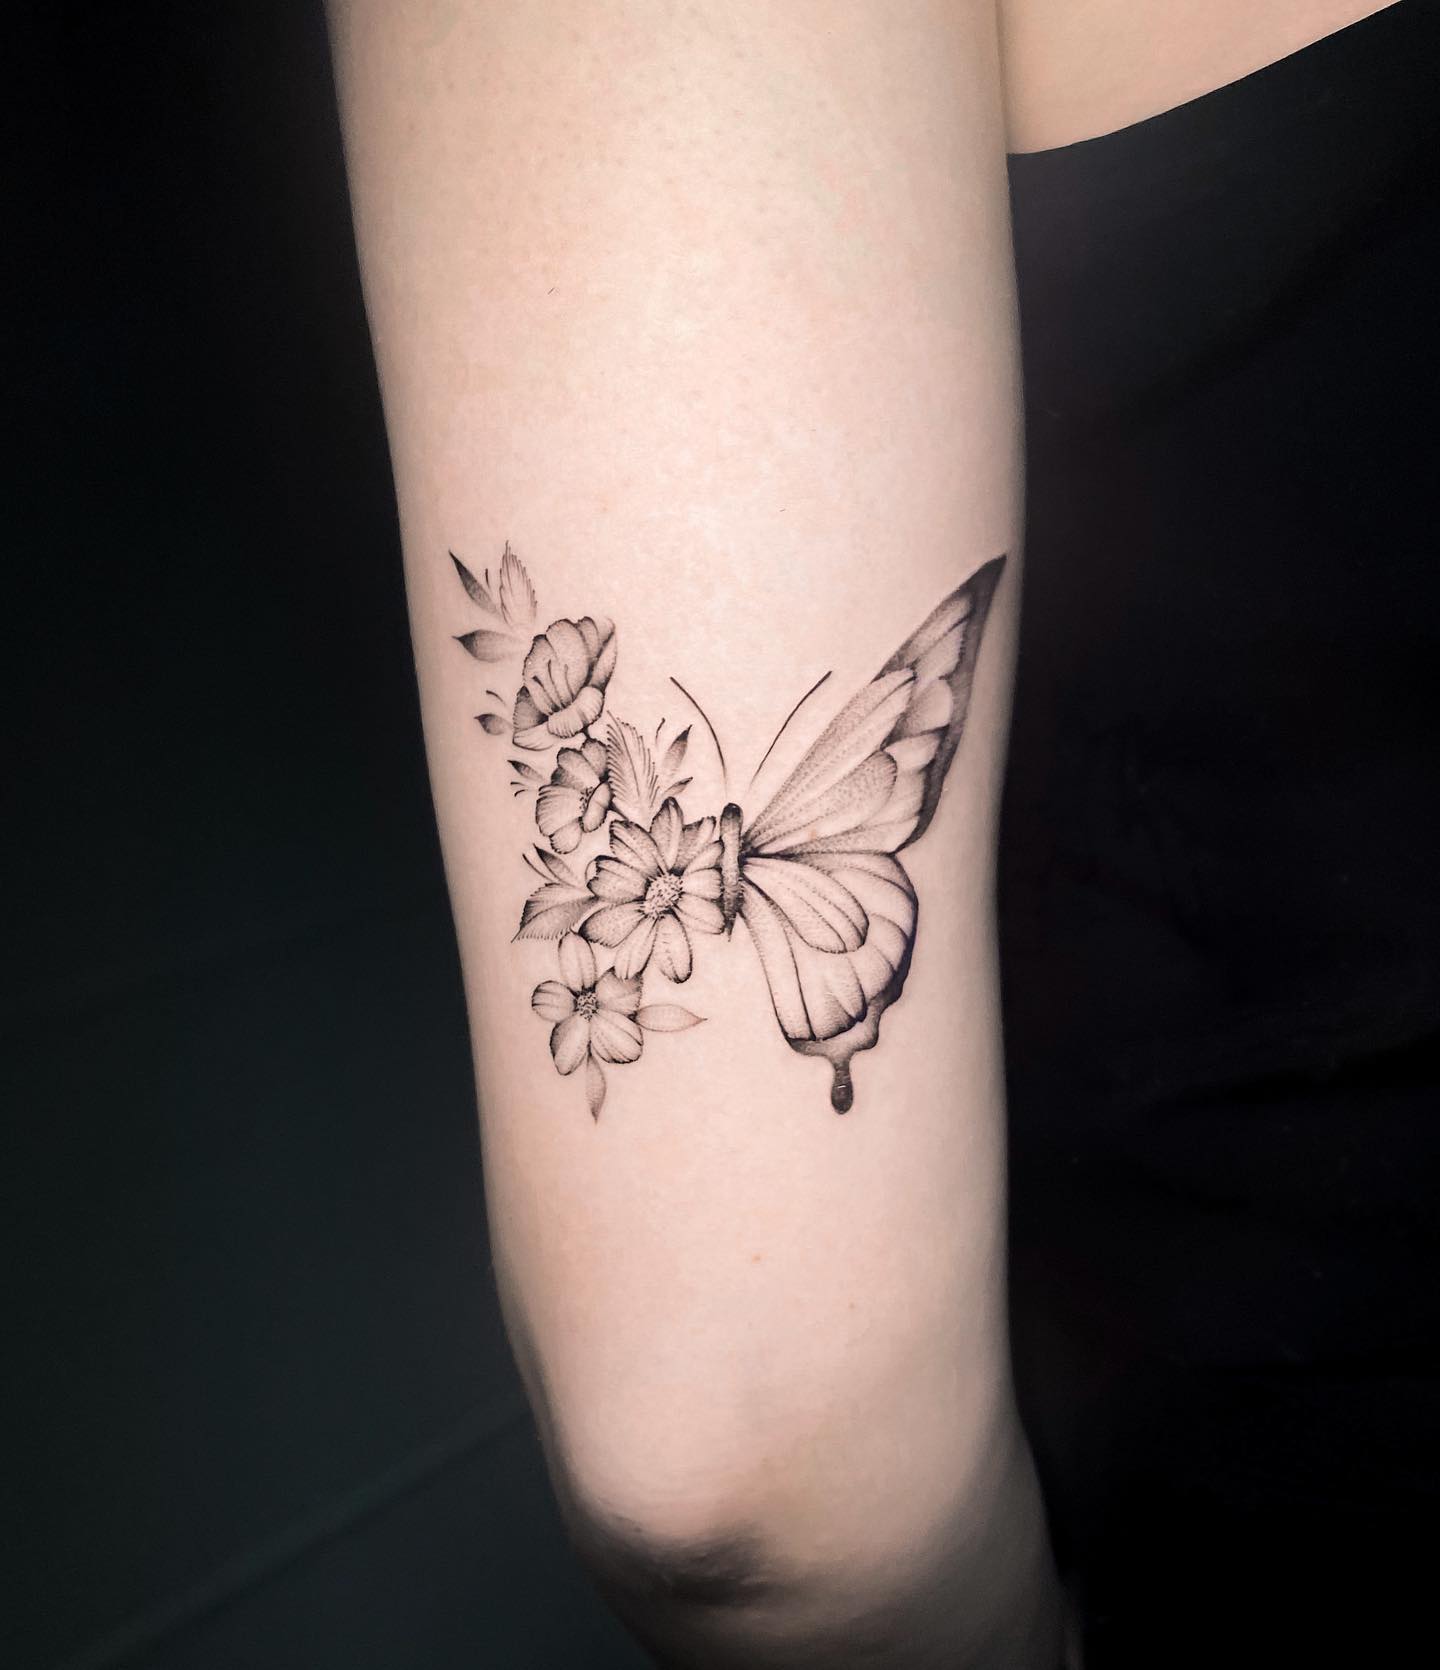 Tatuaje de mariposa con flores